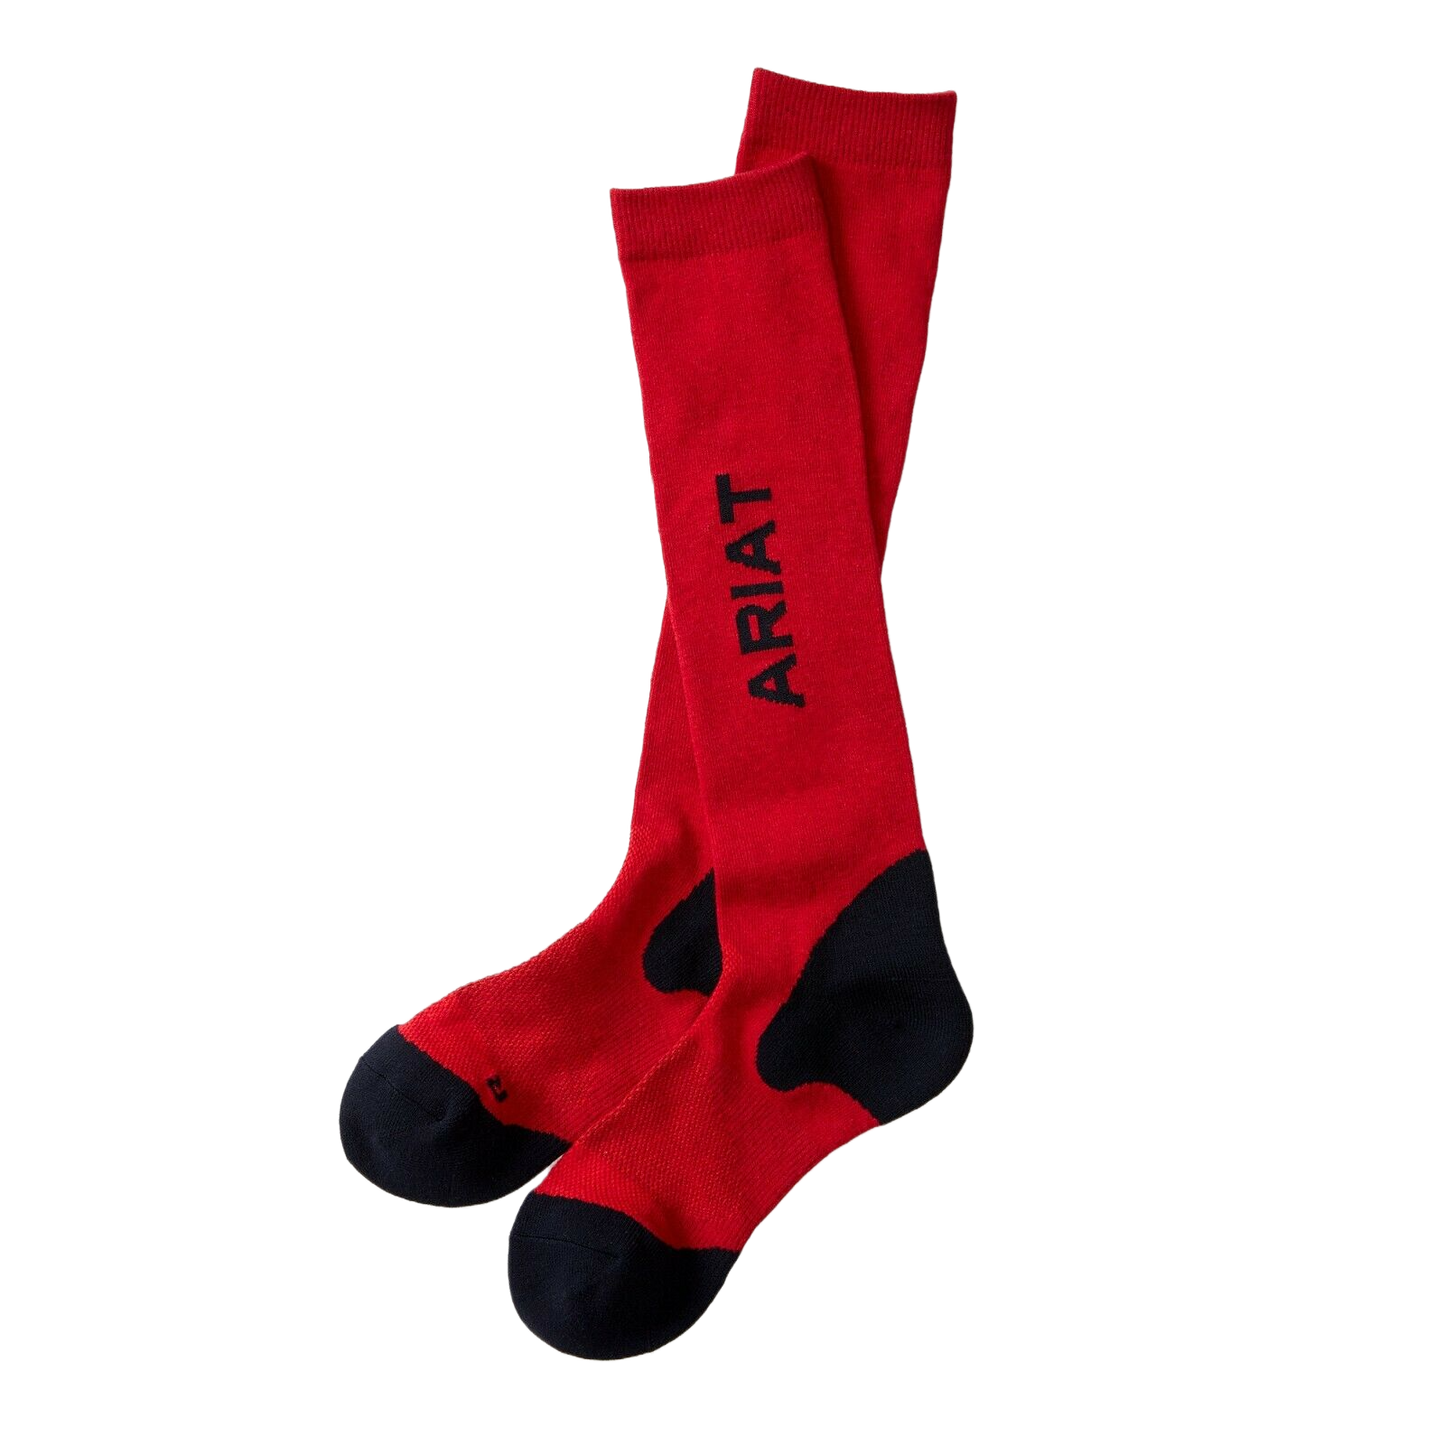 Ariat Unisex Red & Navy AriatTEK Performance Socks 10022536